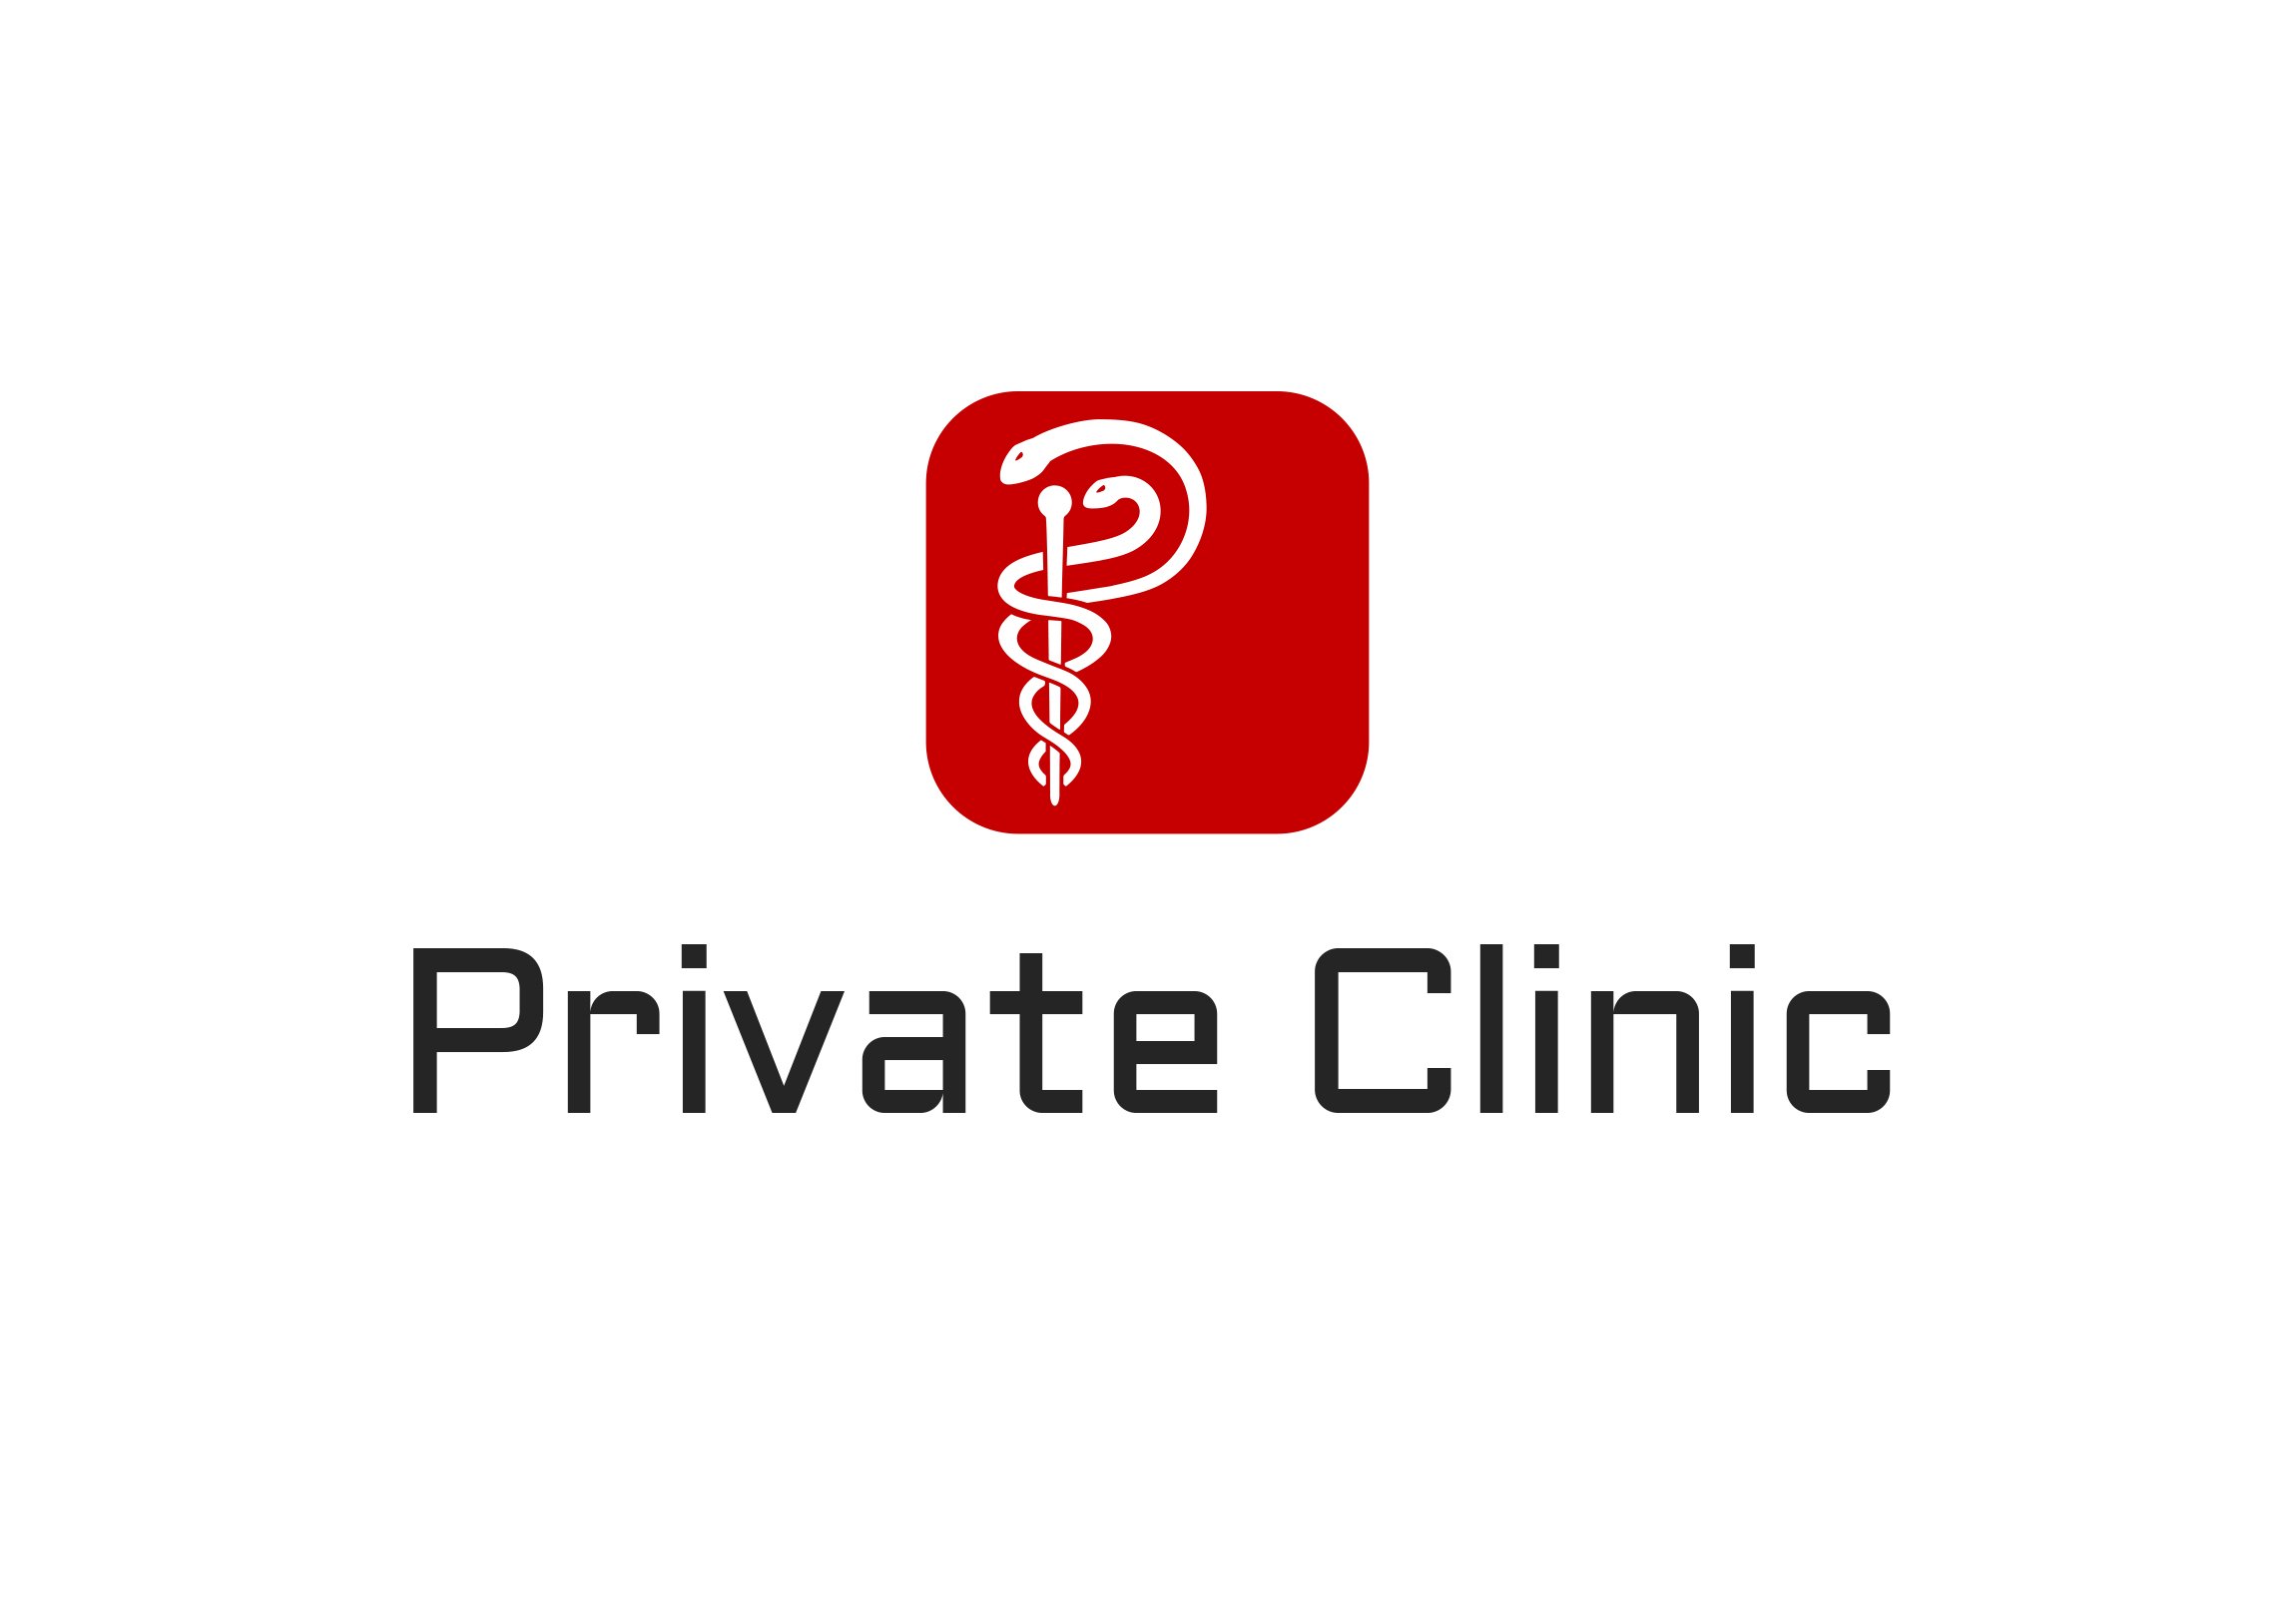 P Medical logo preview image.